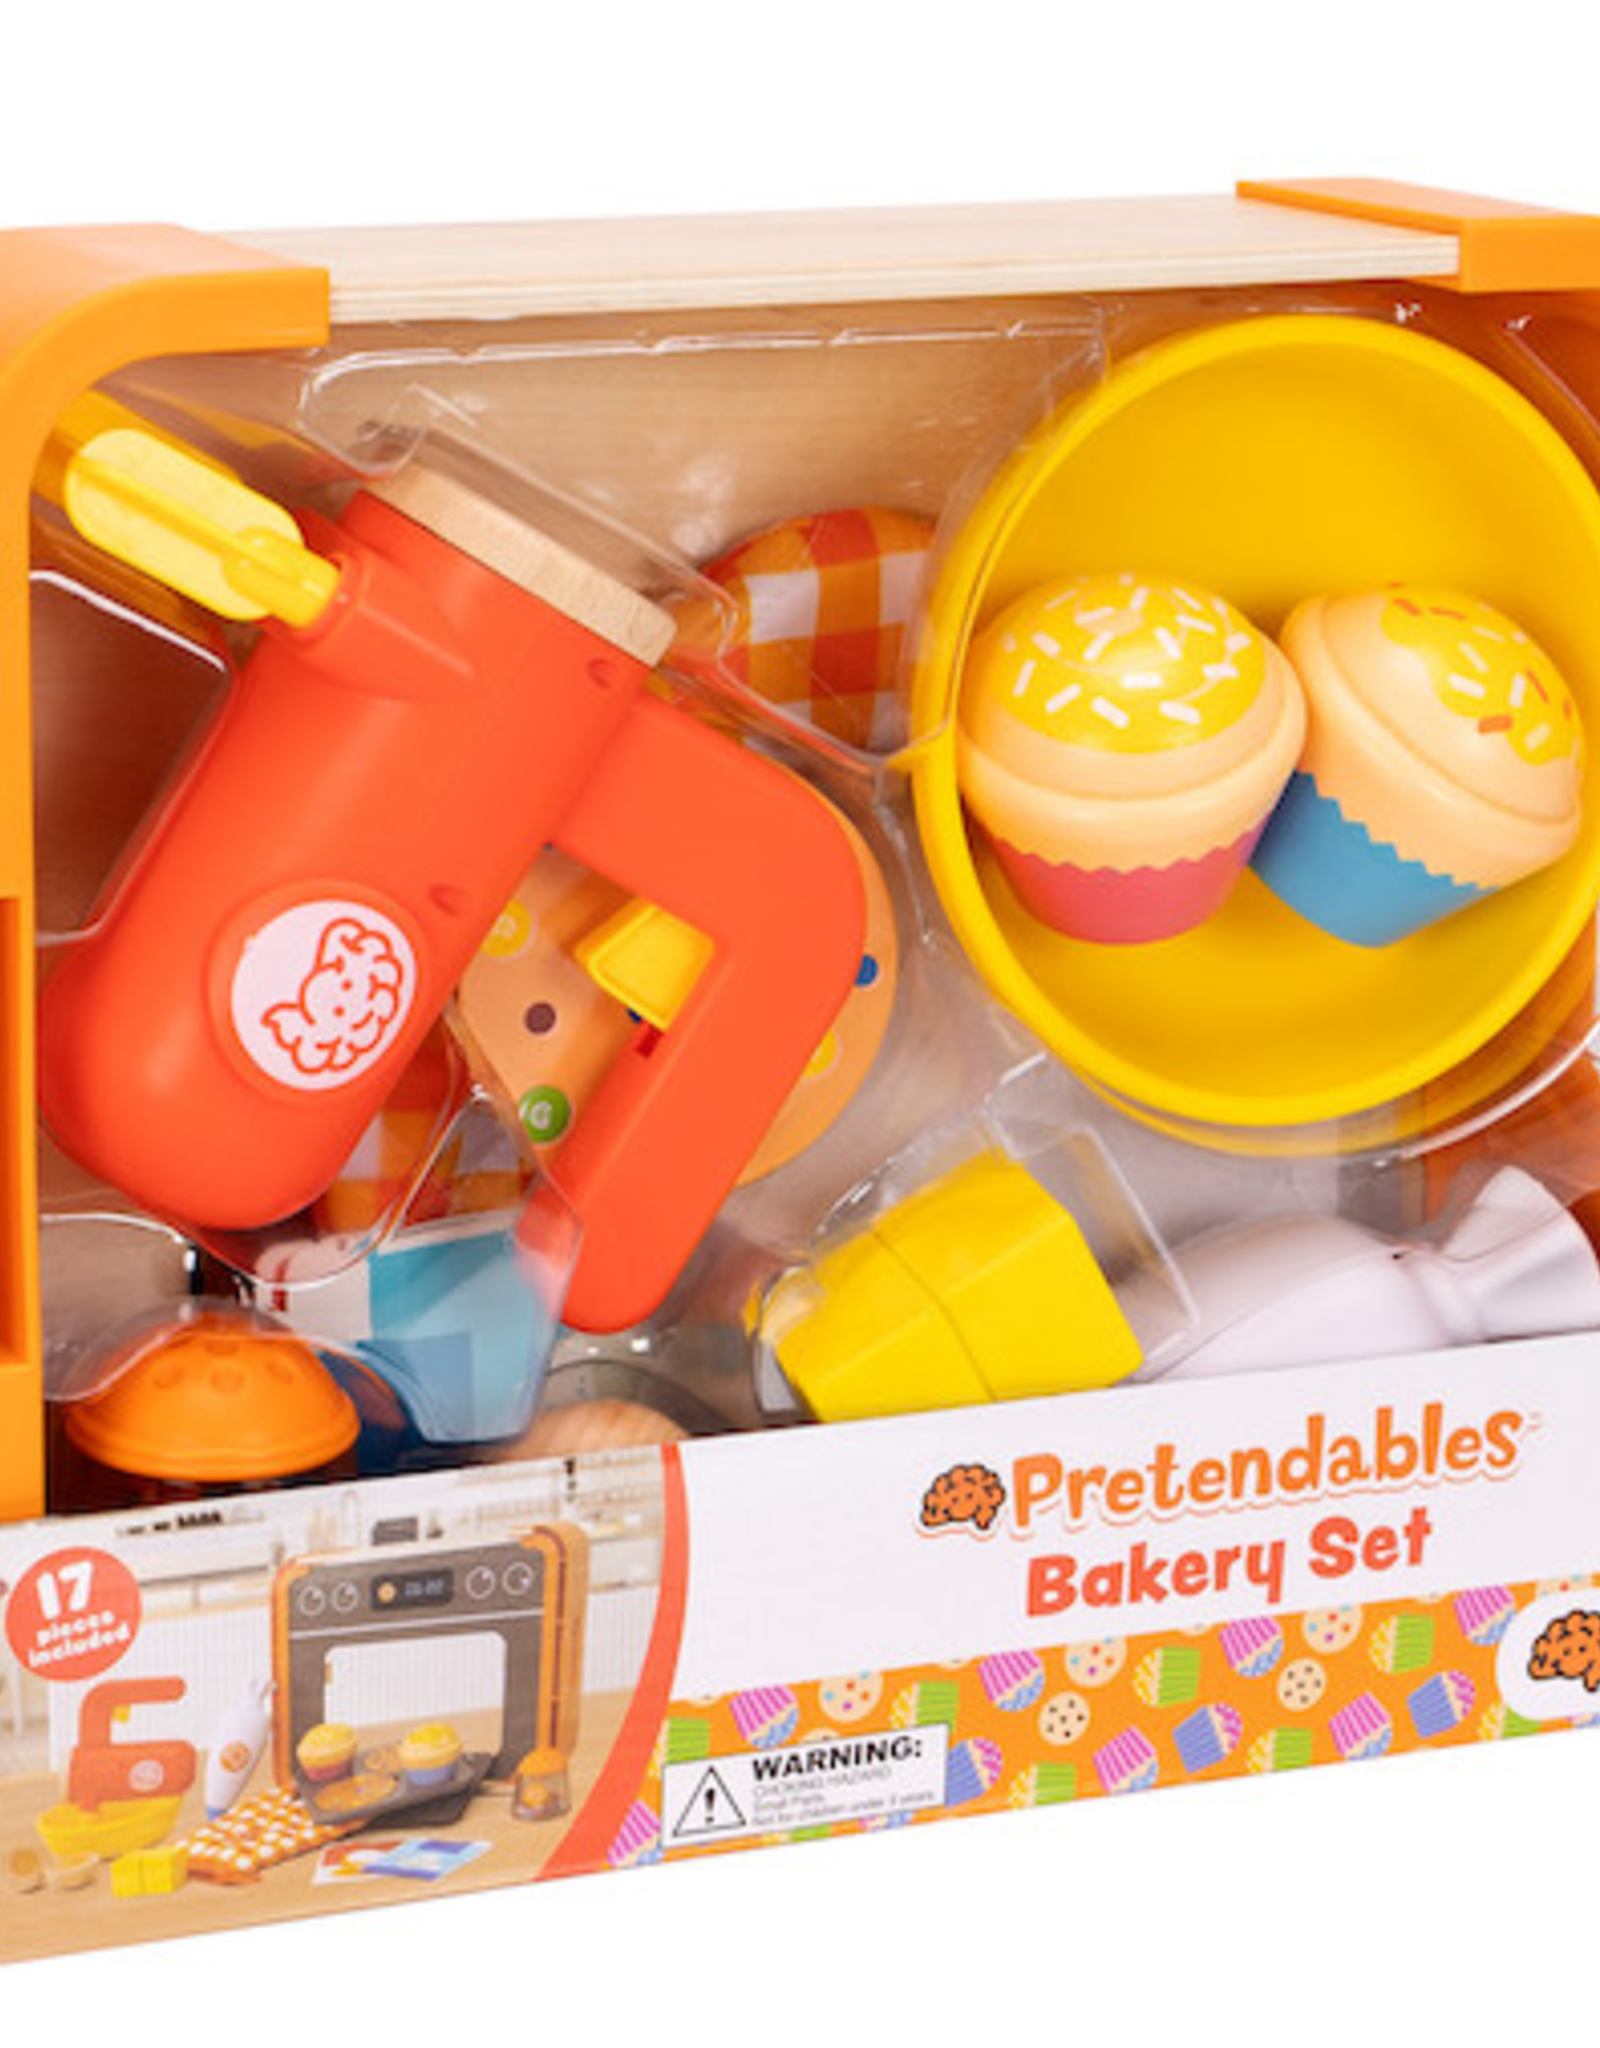 Fat Brain Toy Co Pretendables: Bakery Set